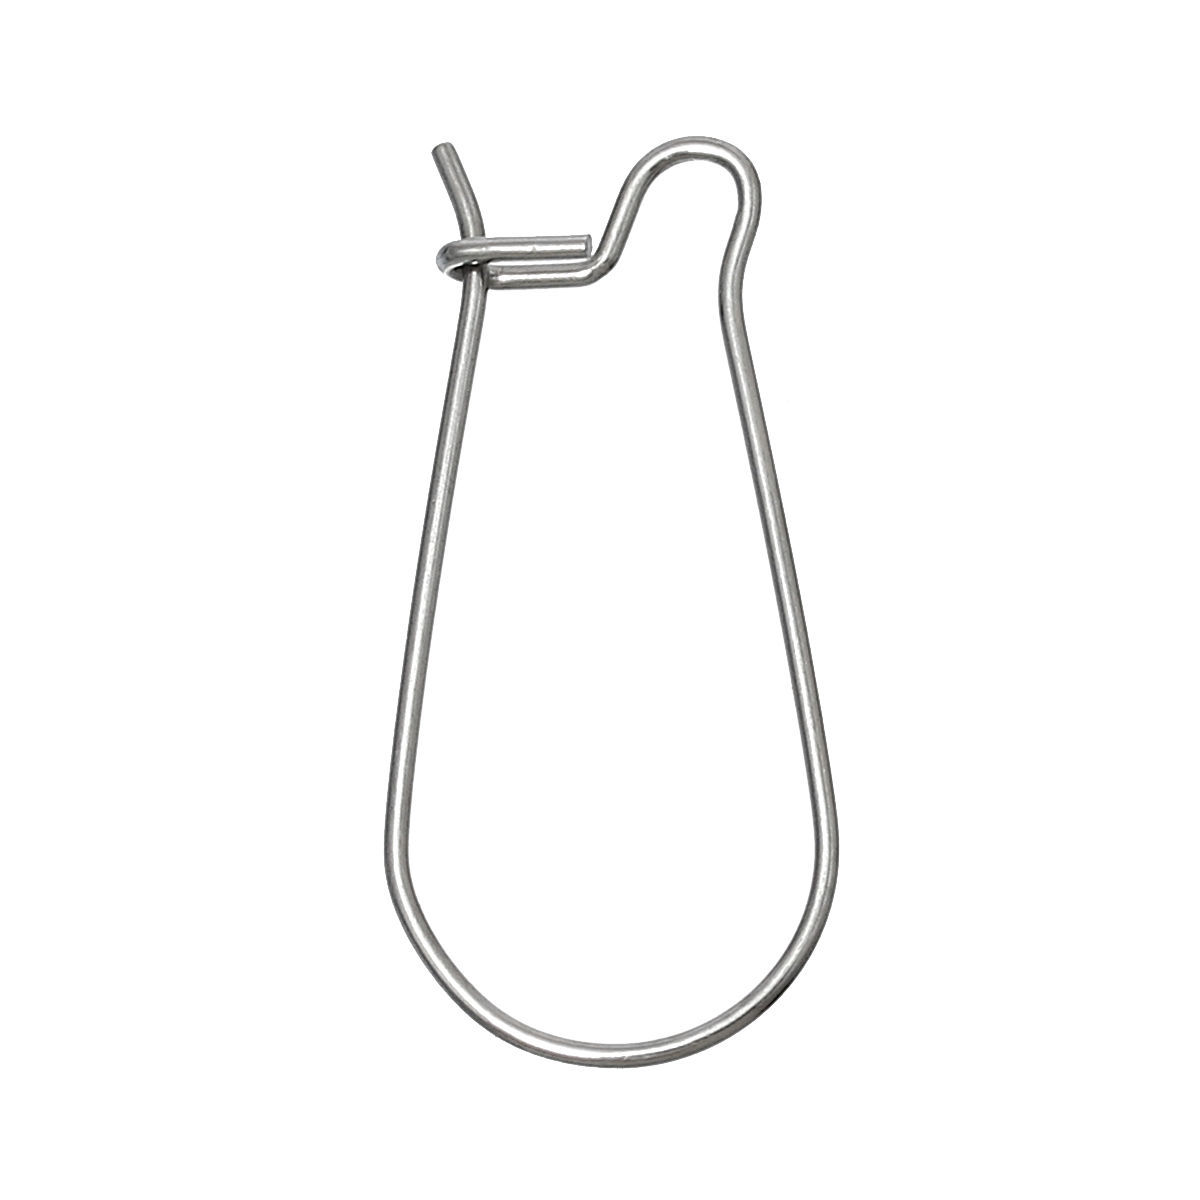 Picture of 304 Stainless Steel Kidney Ear Wire Hooks Earring Findings Silver Tone 25mm(1") x 12mm( 4/8"), Post/ Wire Size: (21 gauge), 50 PCs